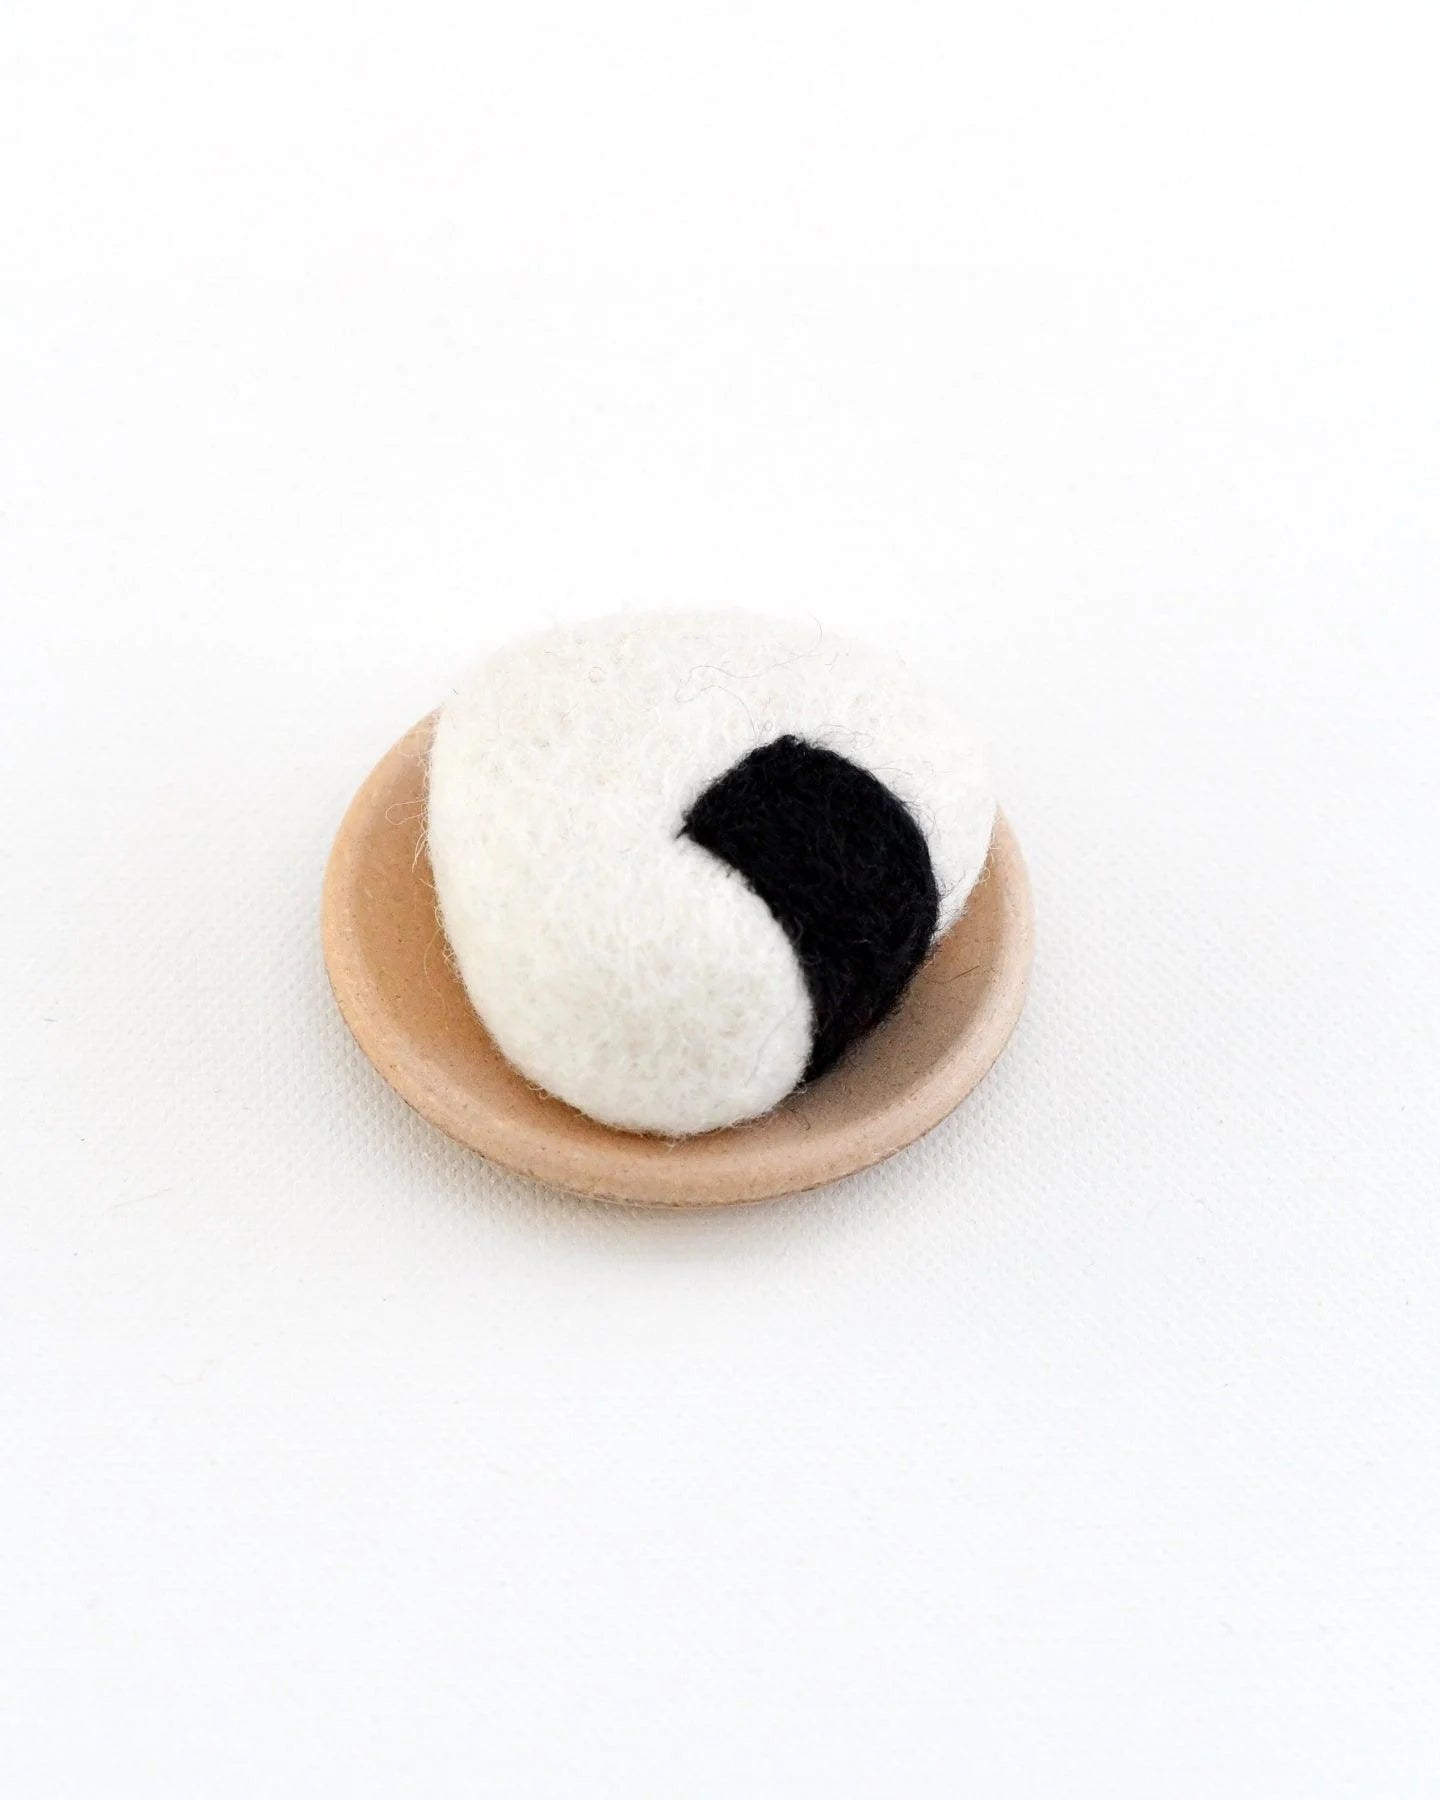 Felt Onigiri sushi Japanese rice ball